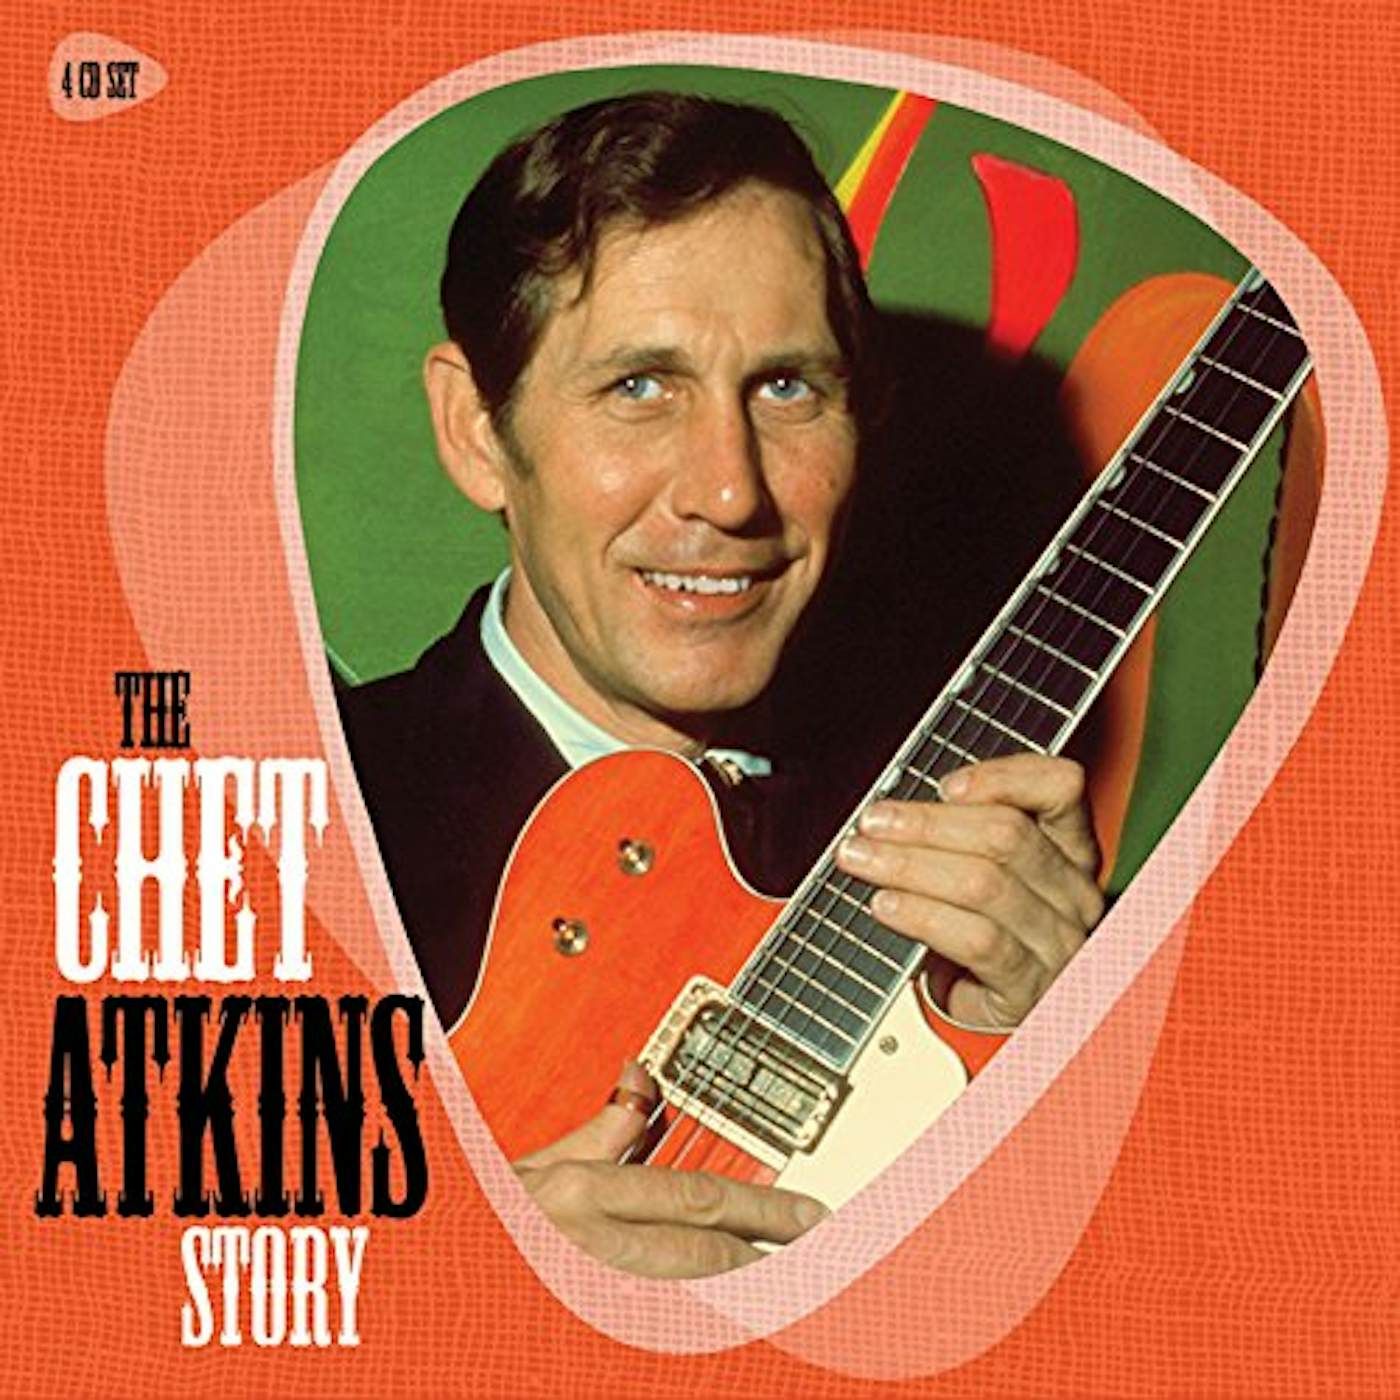 CHET ATKINS STORY CD